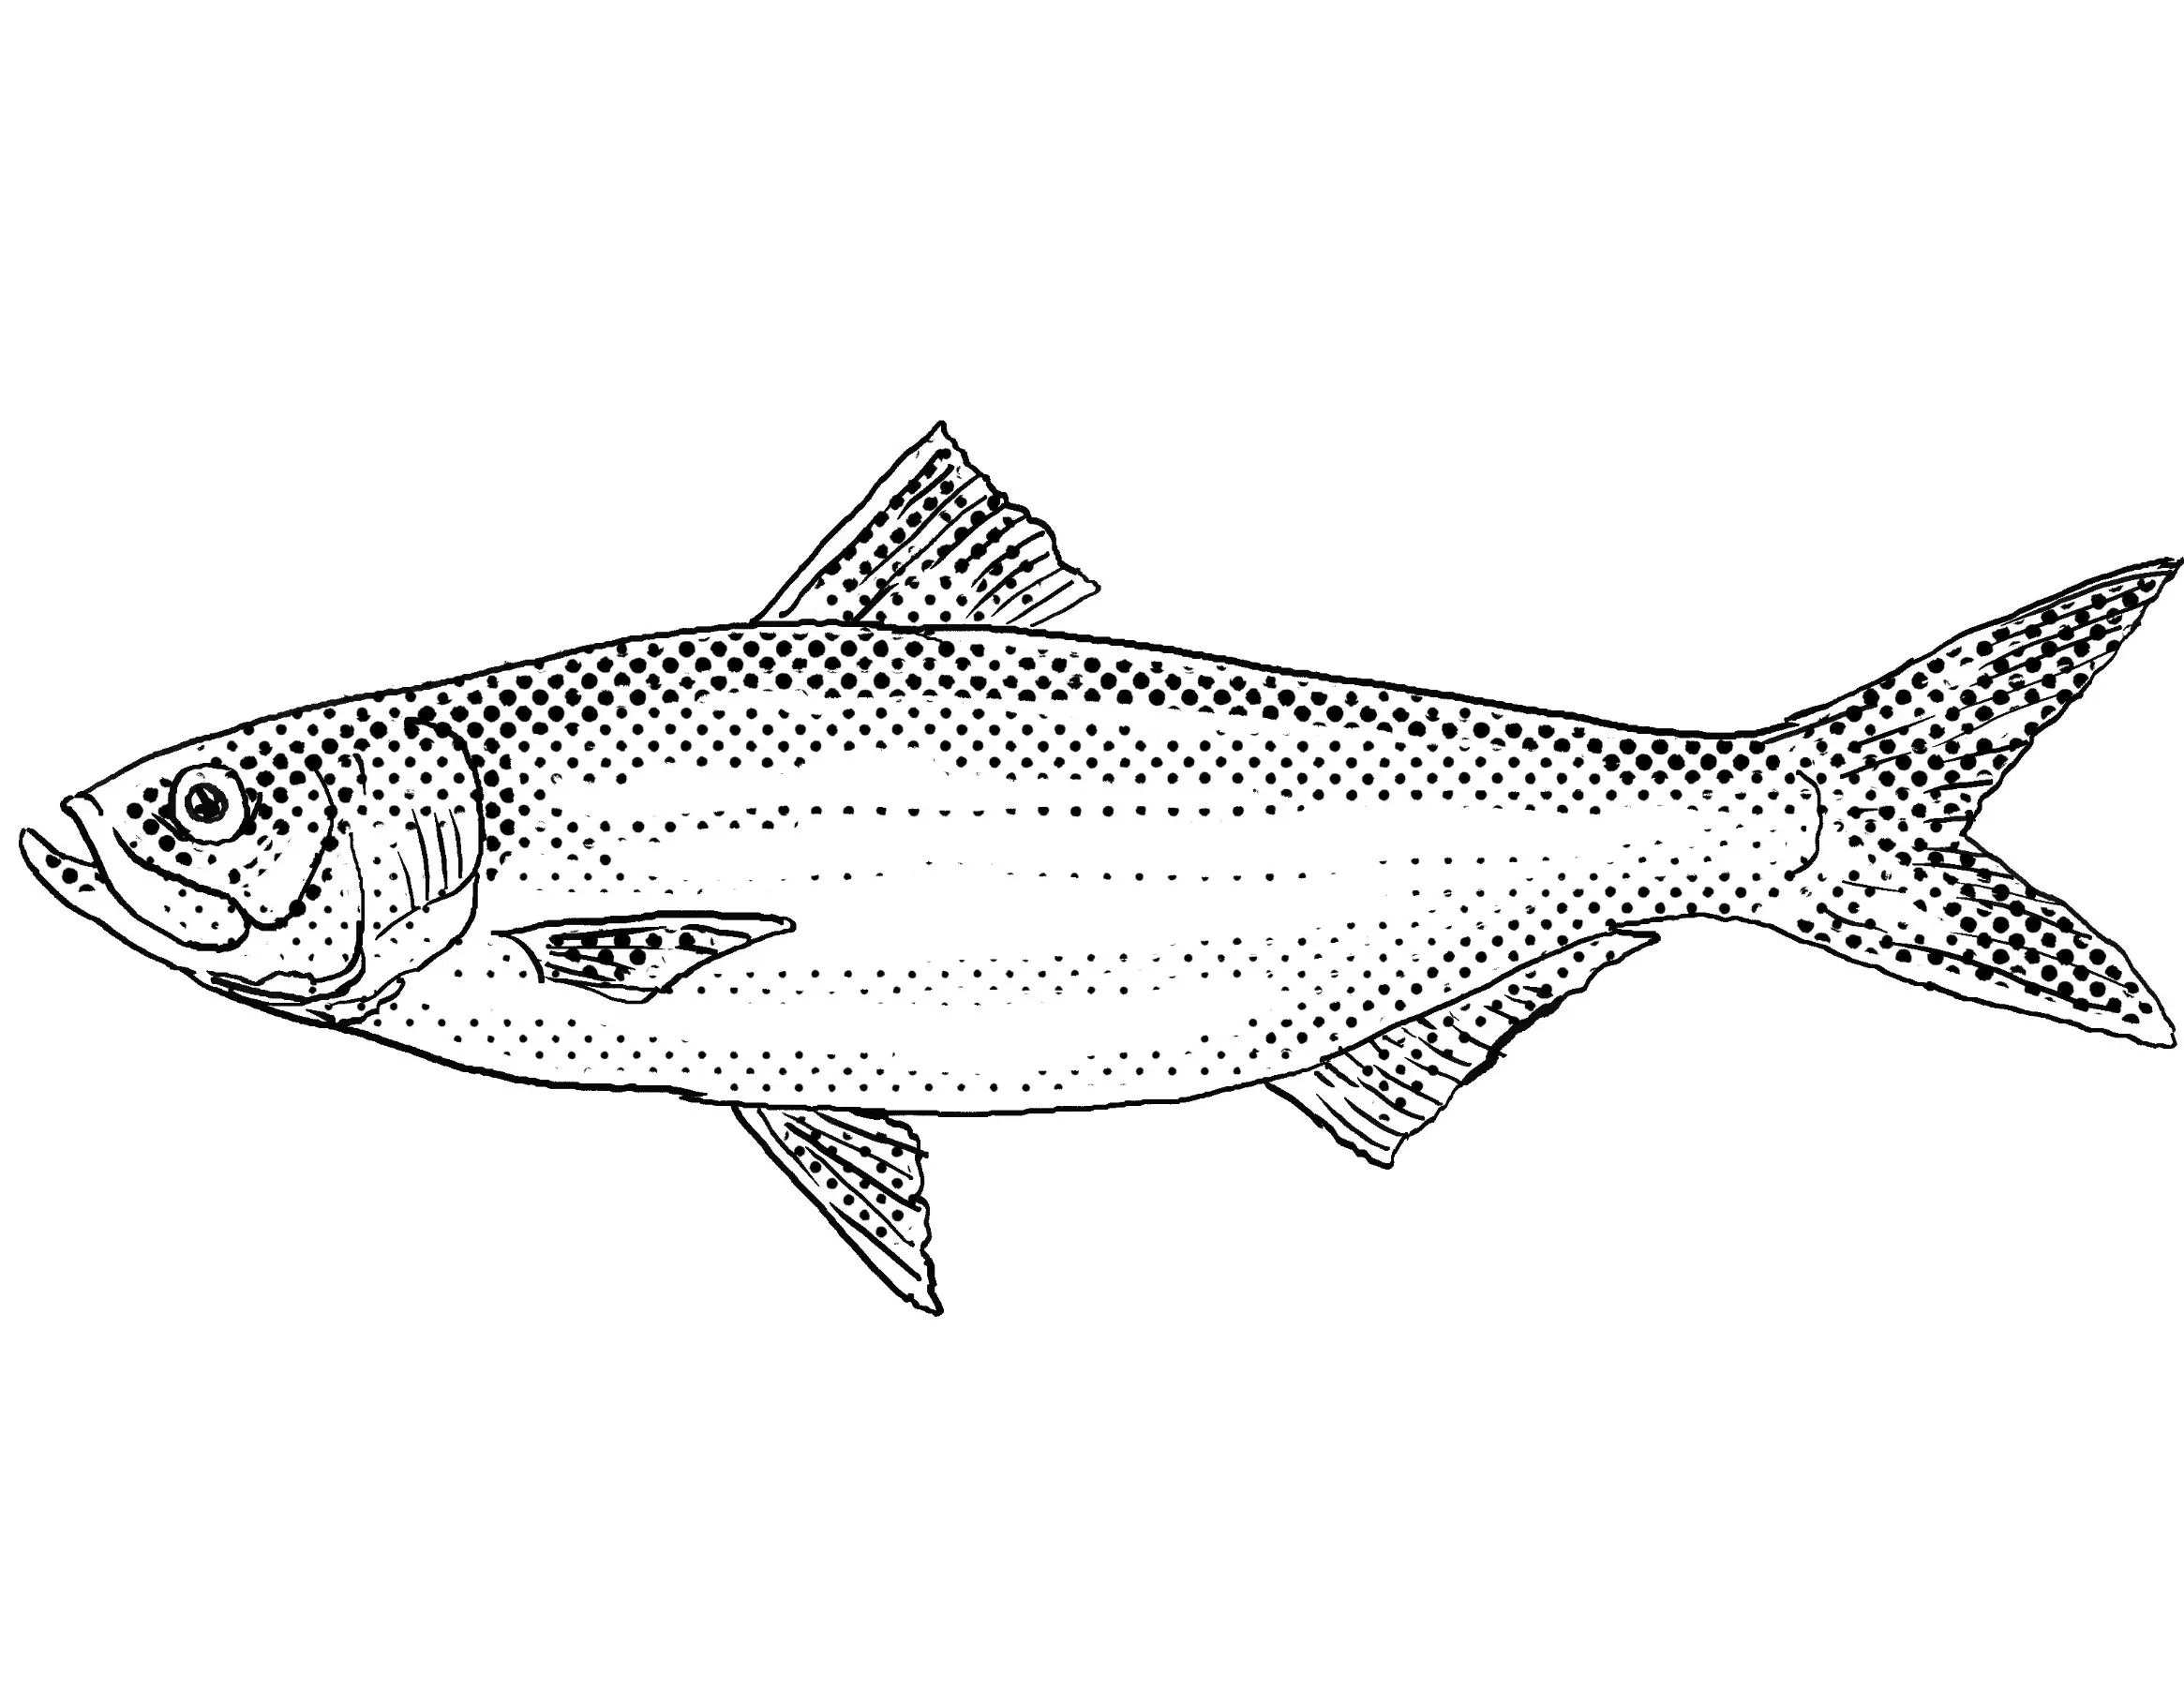 Skipjack herring, or skipjack shad